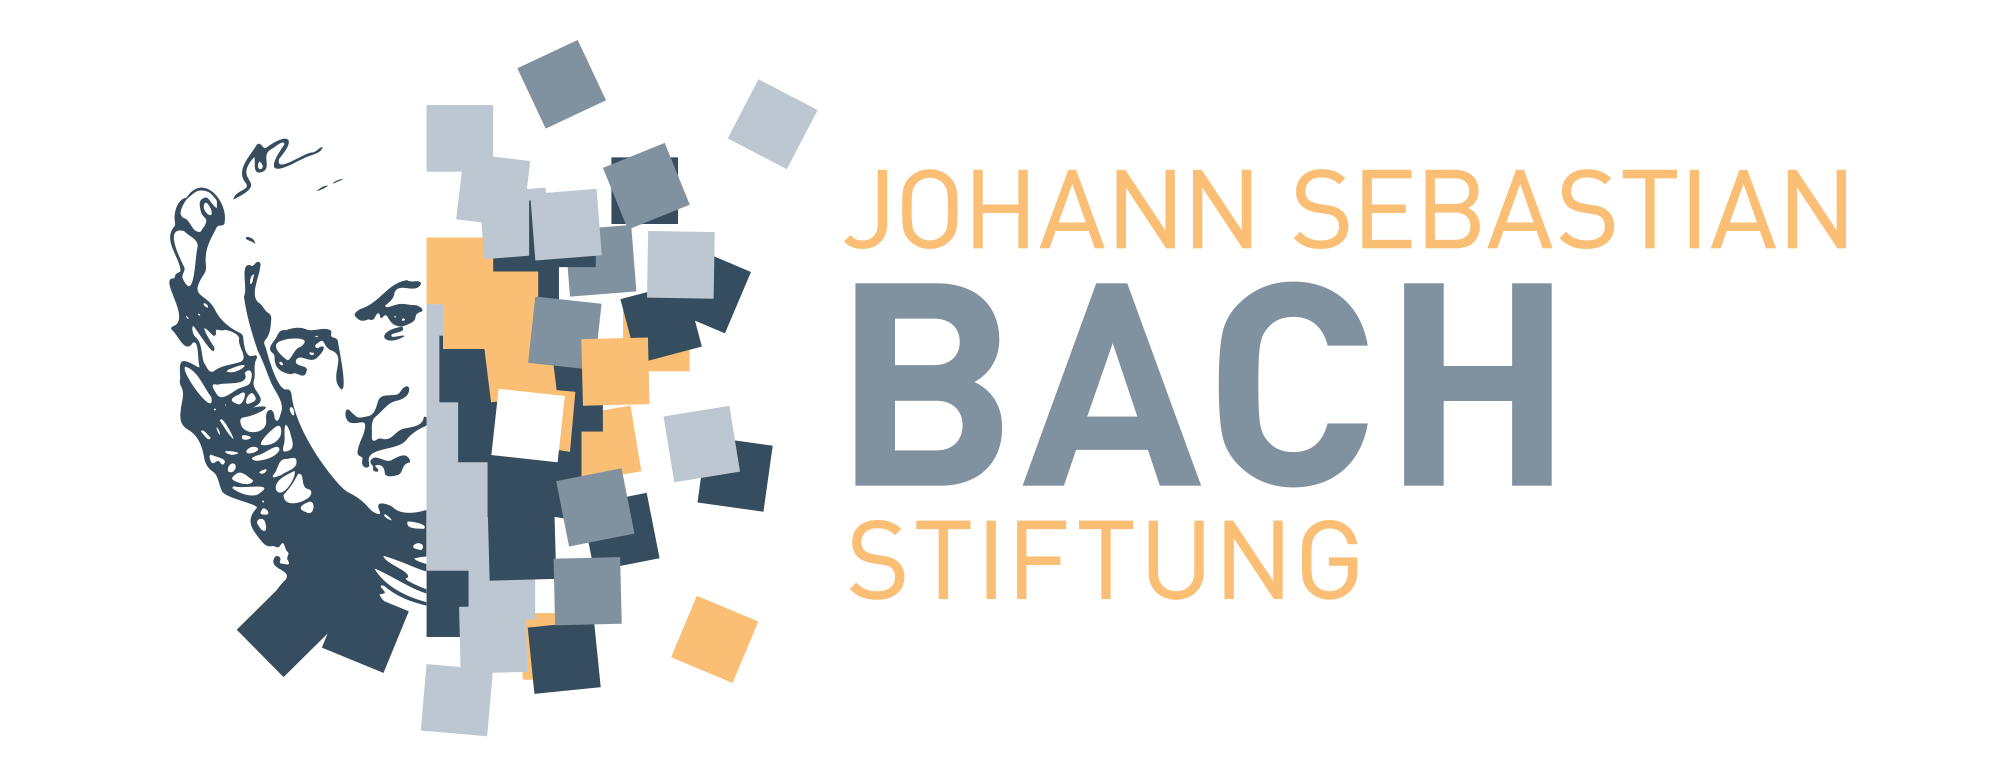 Johann Sebastian Bach Stiftung